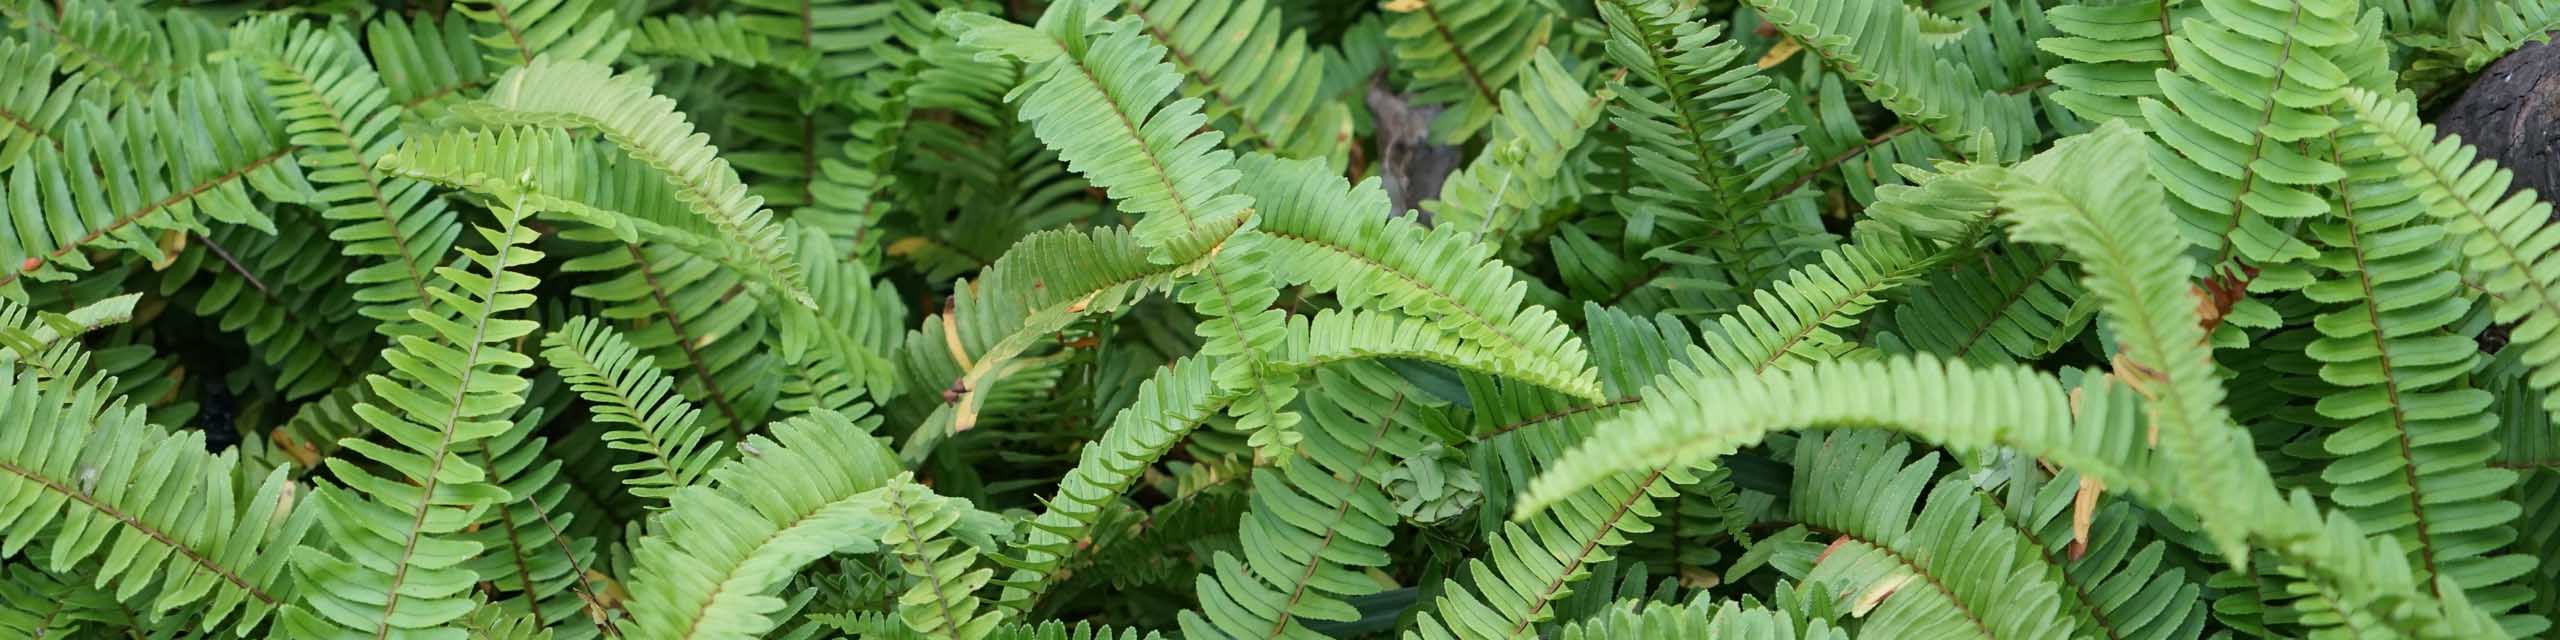 Close up of Boston fern leaves.